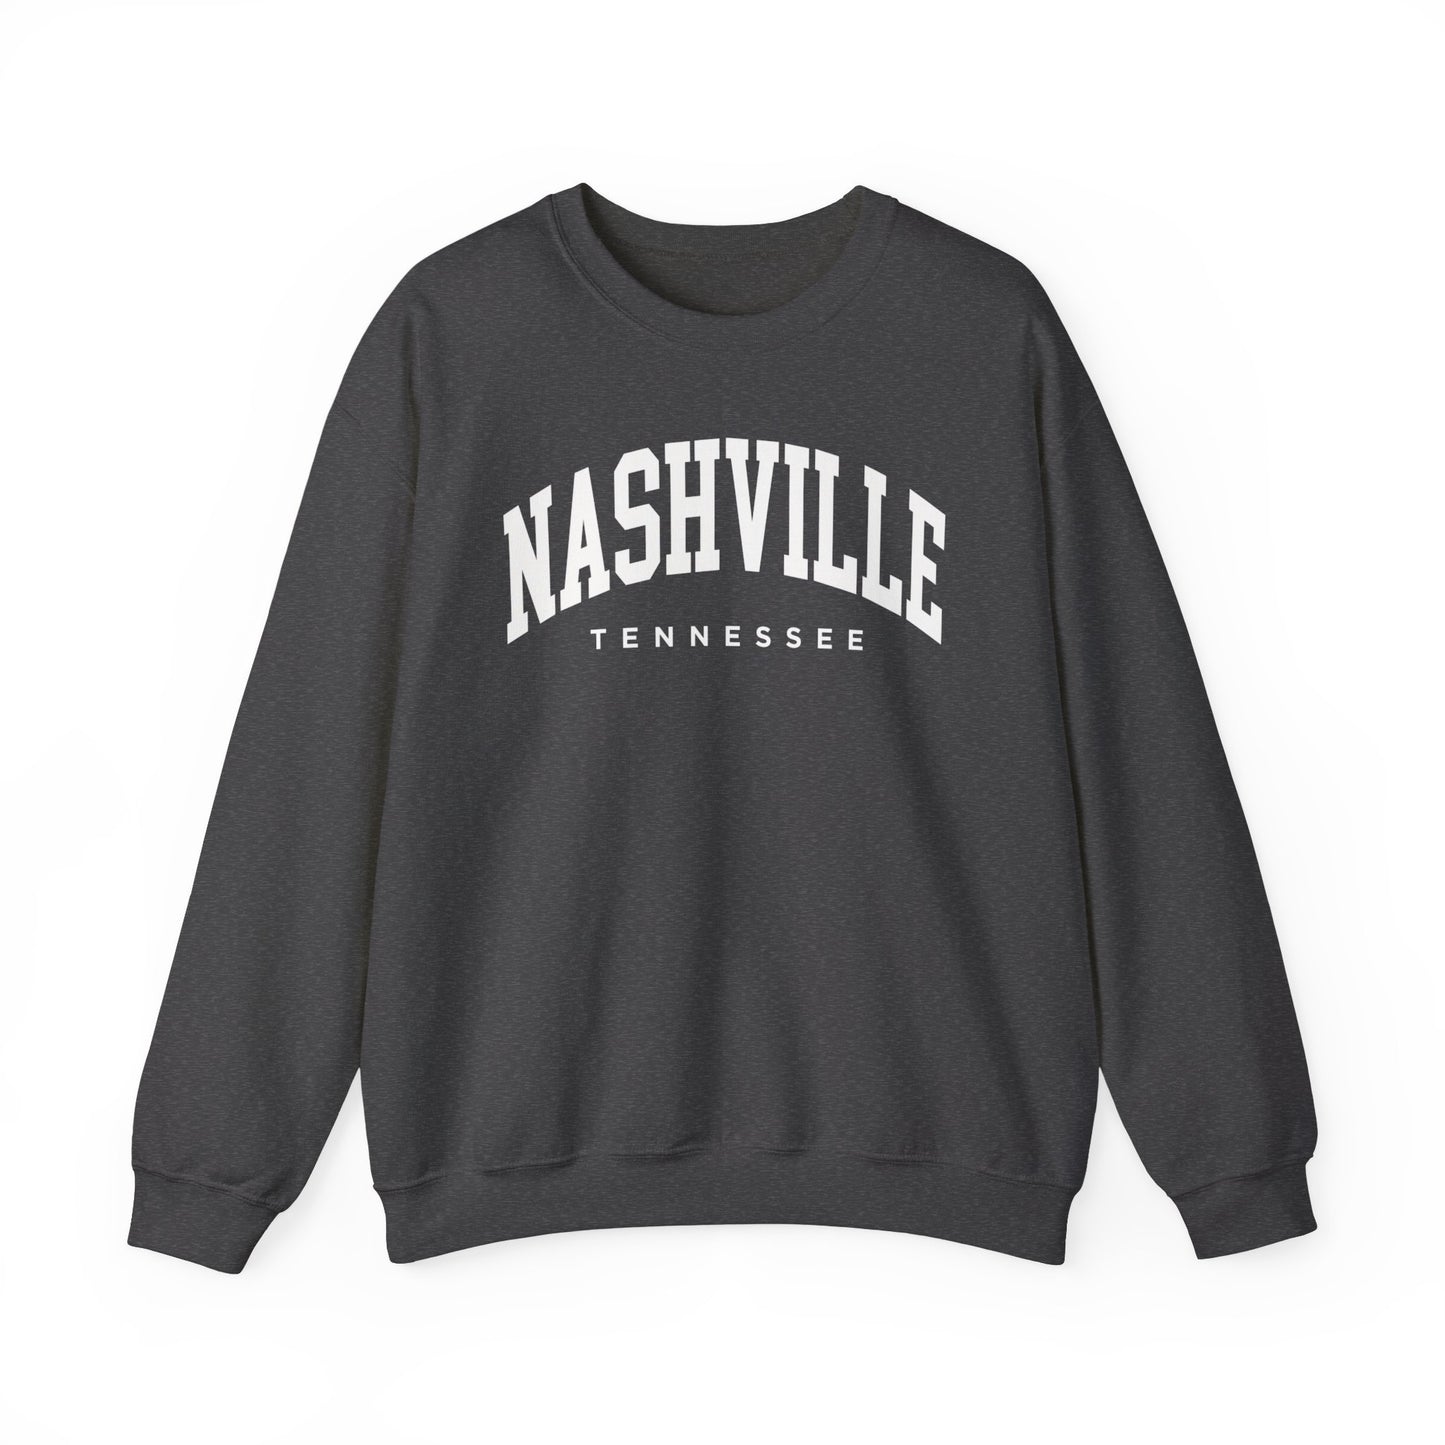 Nashville Tennessee Sweatshirt